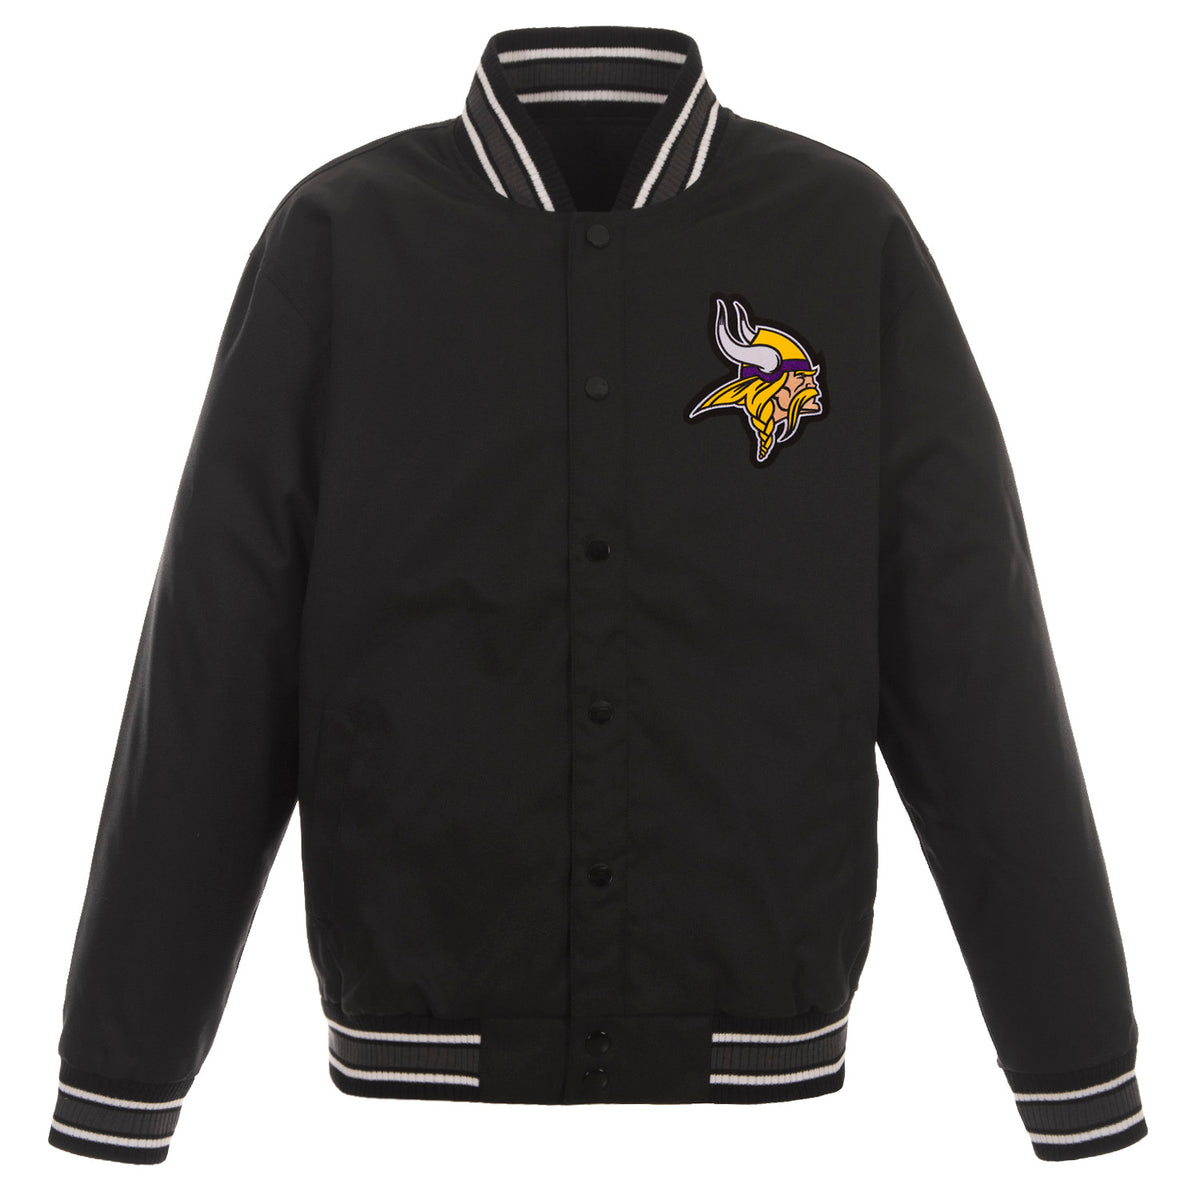 Minnesota Vikings Poly Twill Varsity Jacket - Black | J.H. Sports Jackets